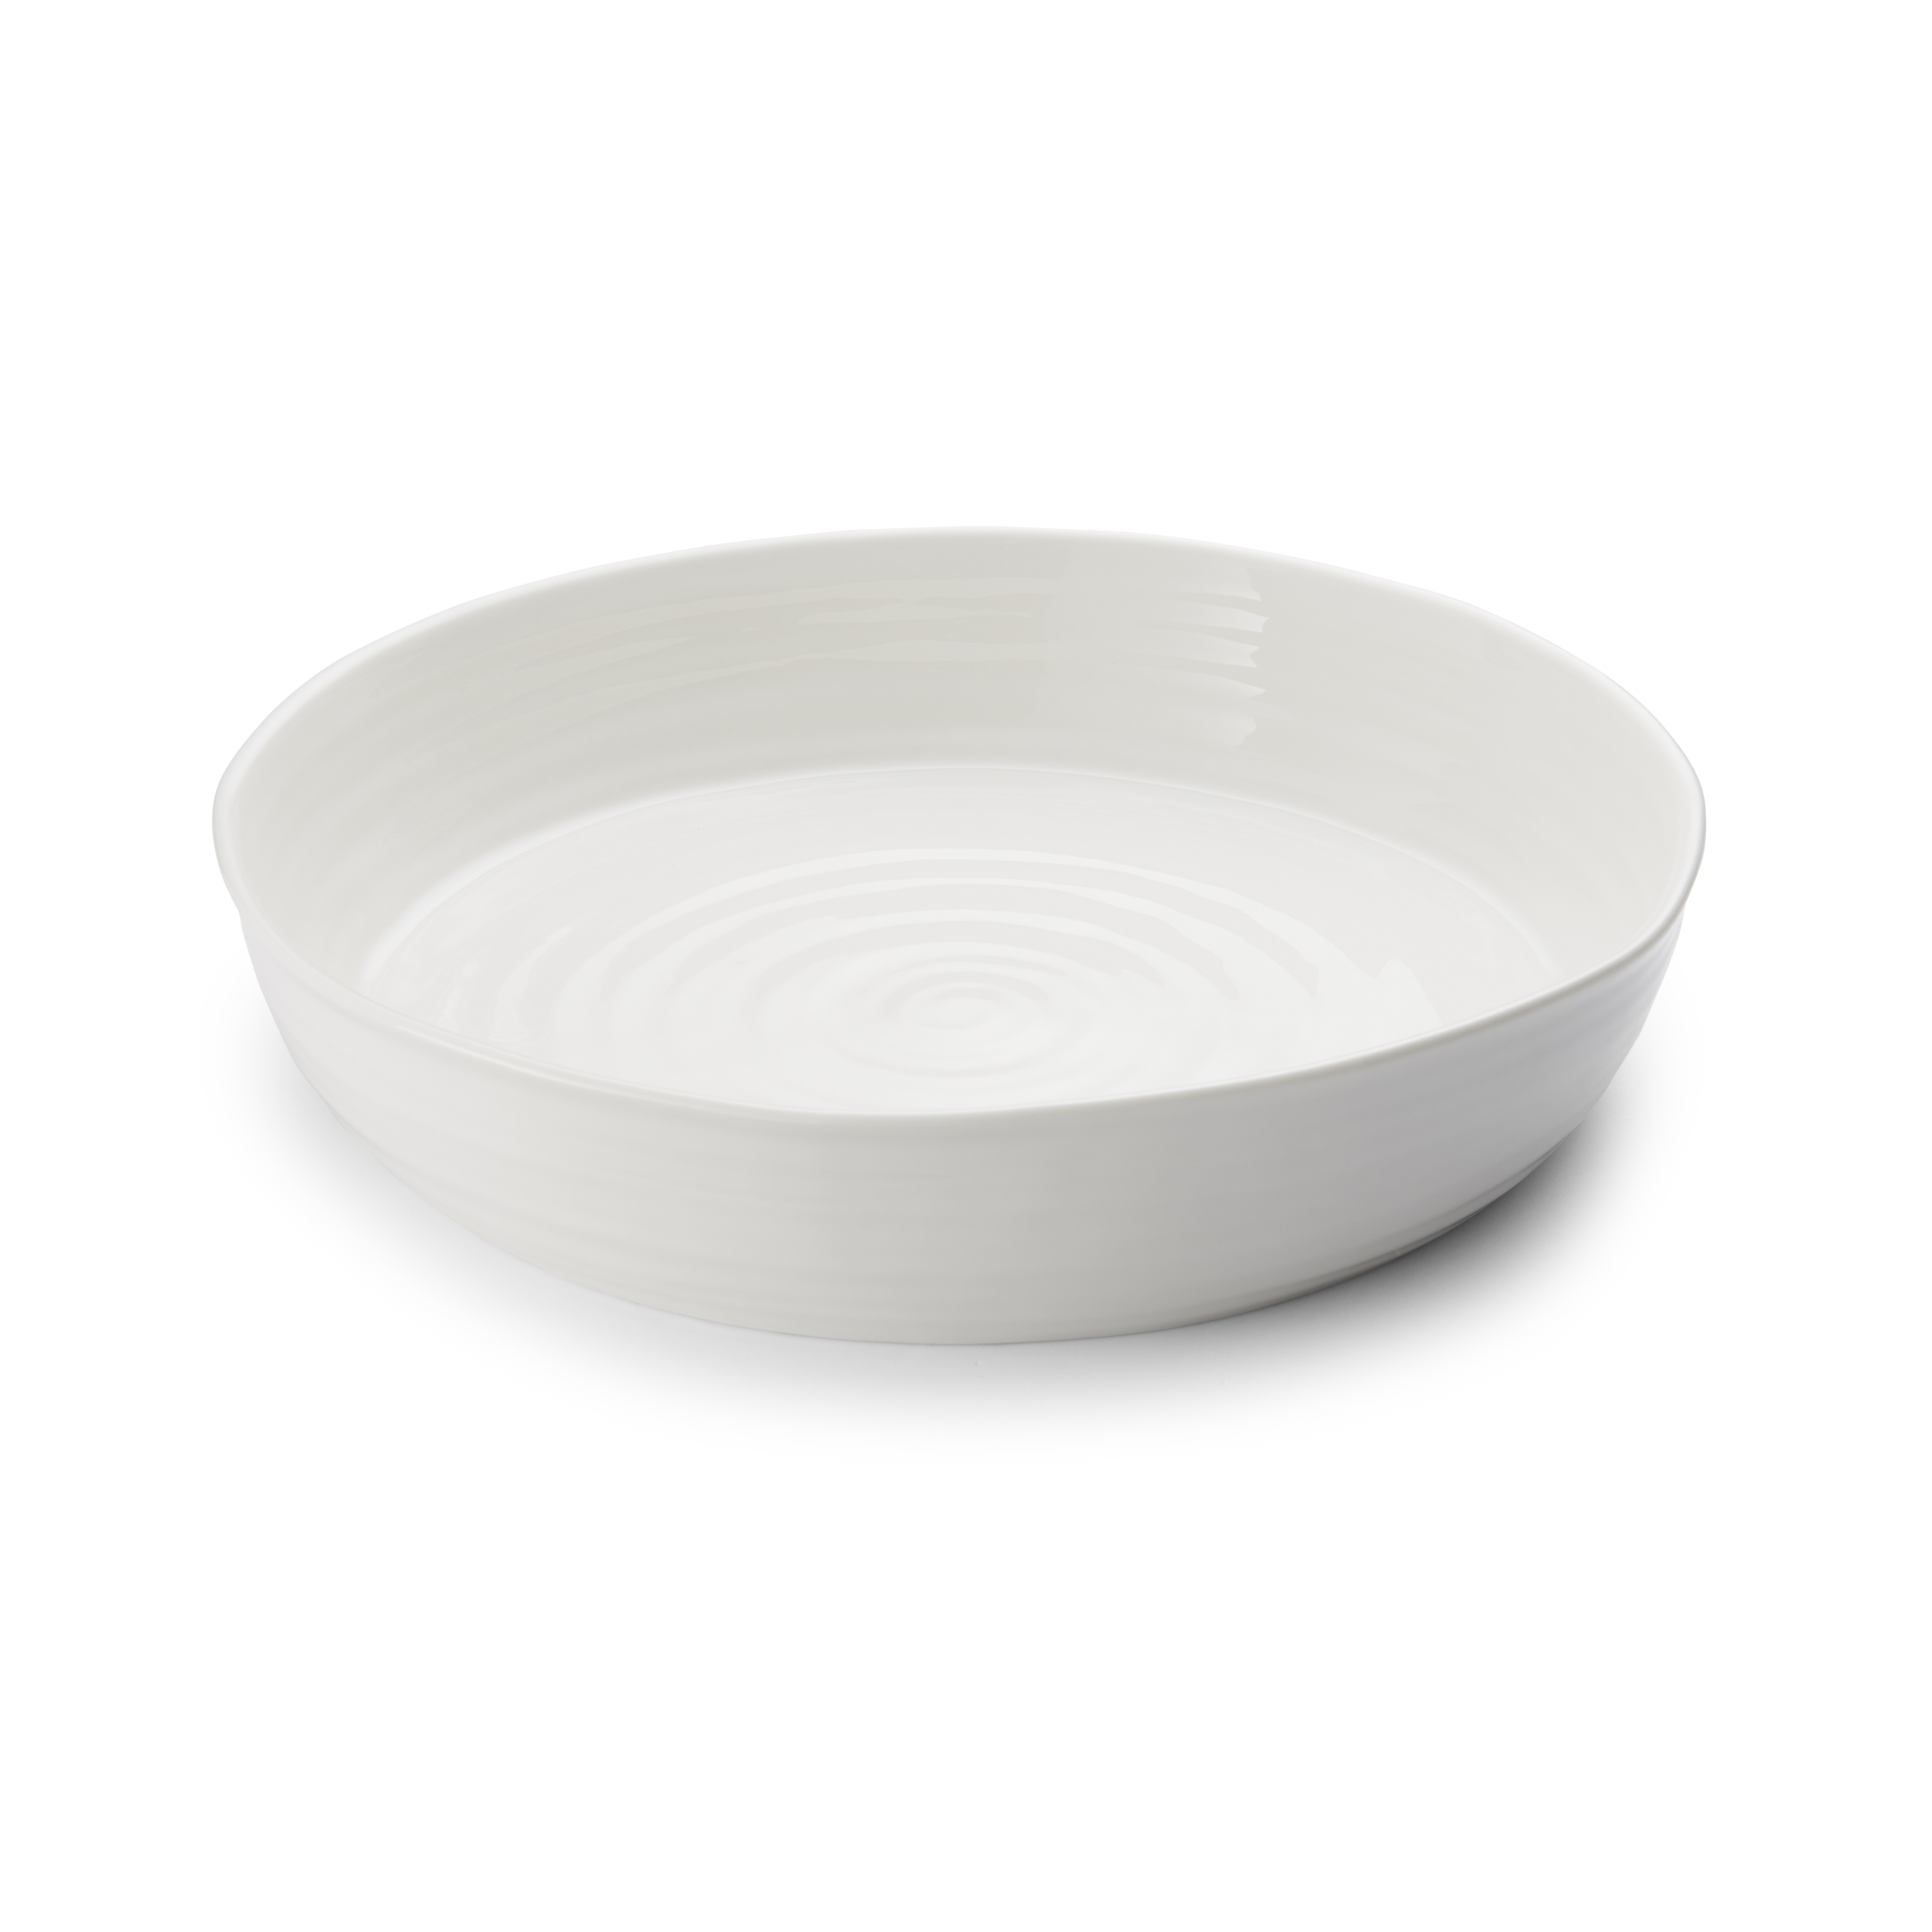 Sophie Conran Round Roasting Dish, White image number null